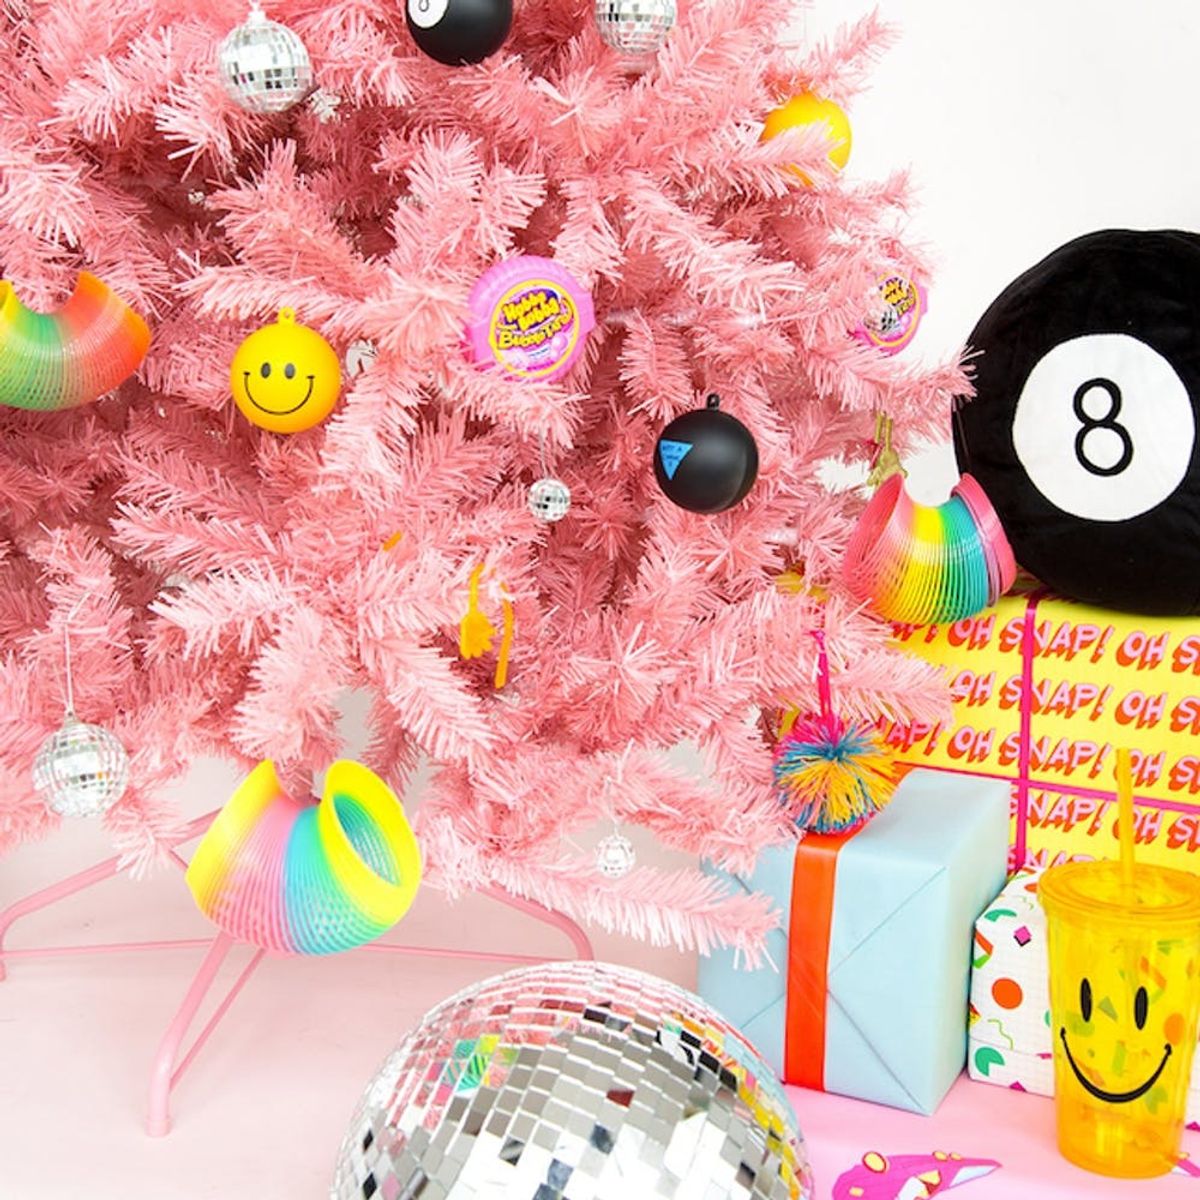 28 Christmas Party Ideas